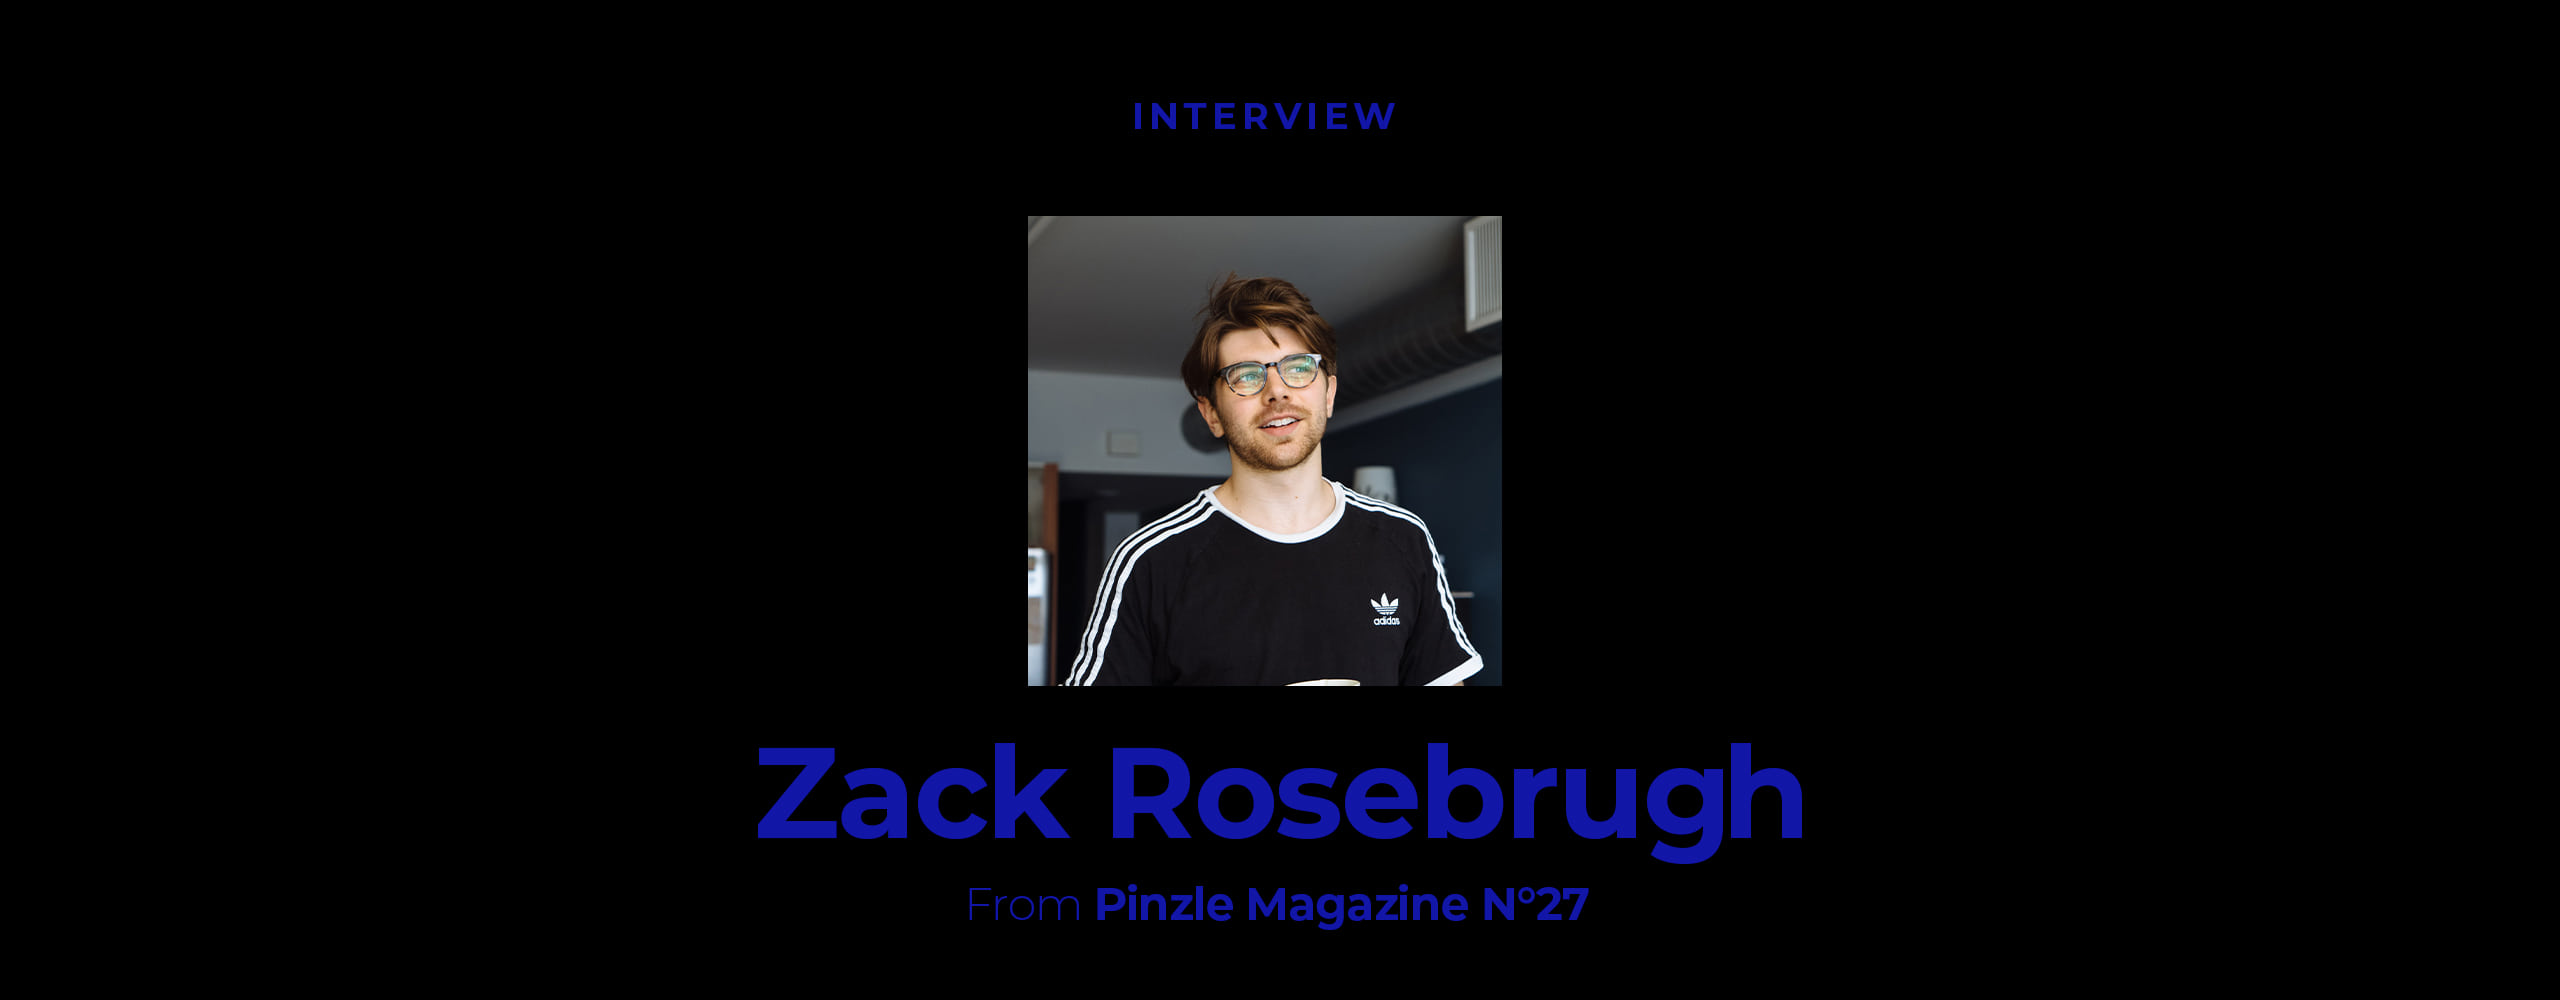 [INTERVIEW] Zack Rosebrugh